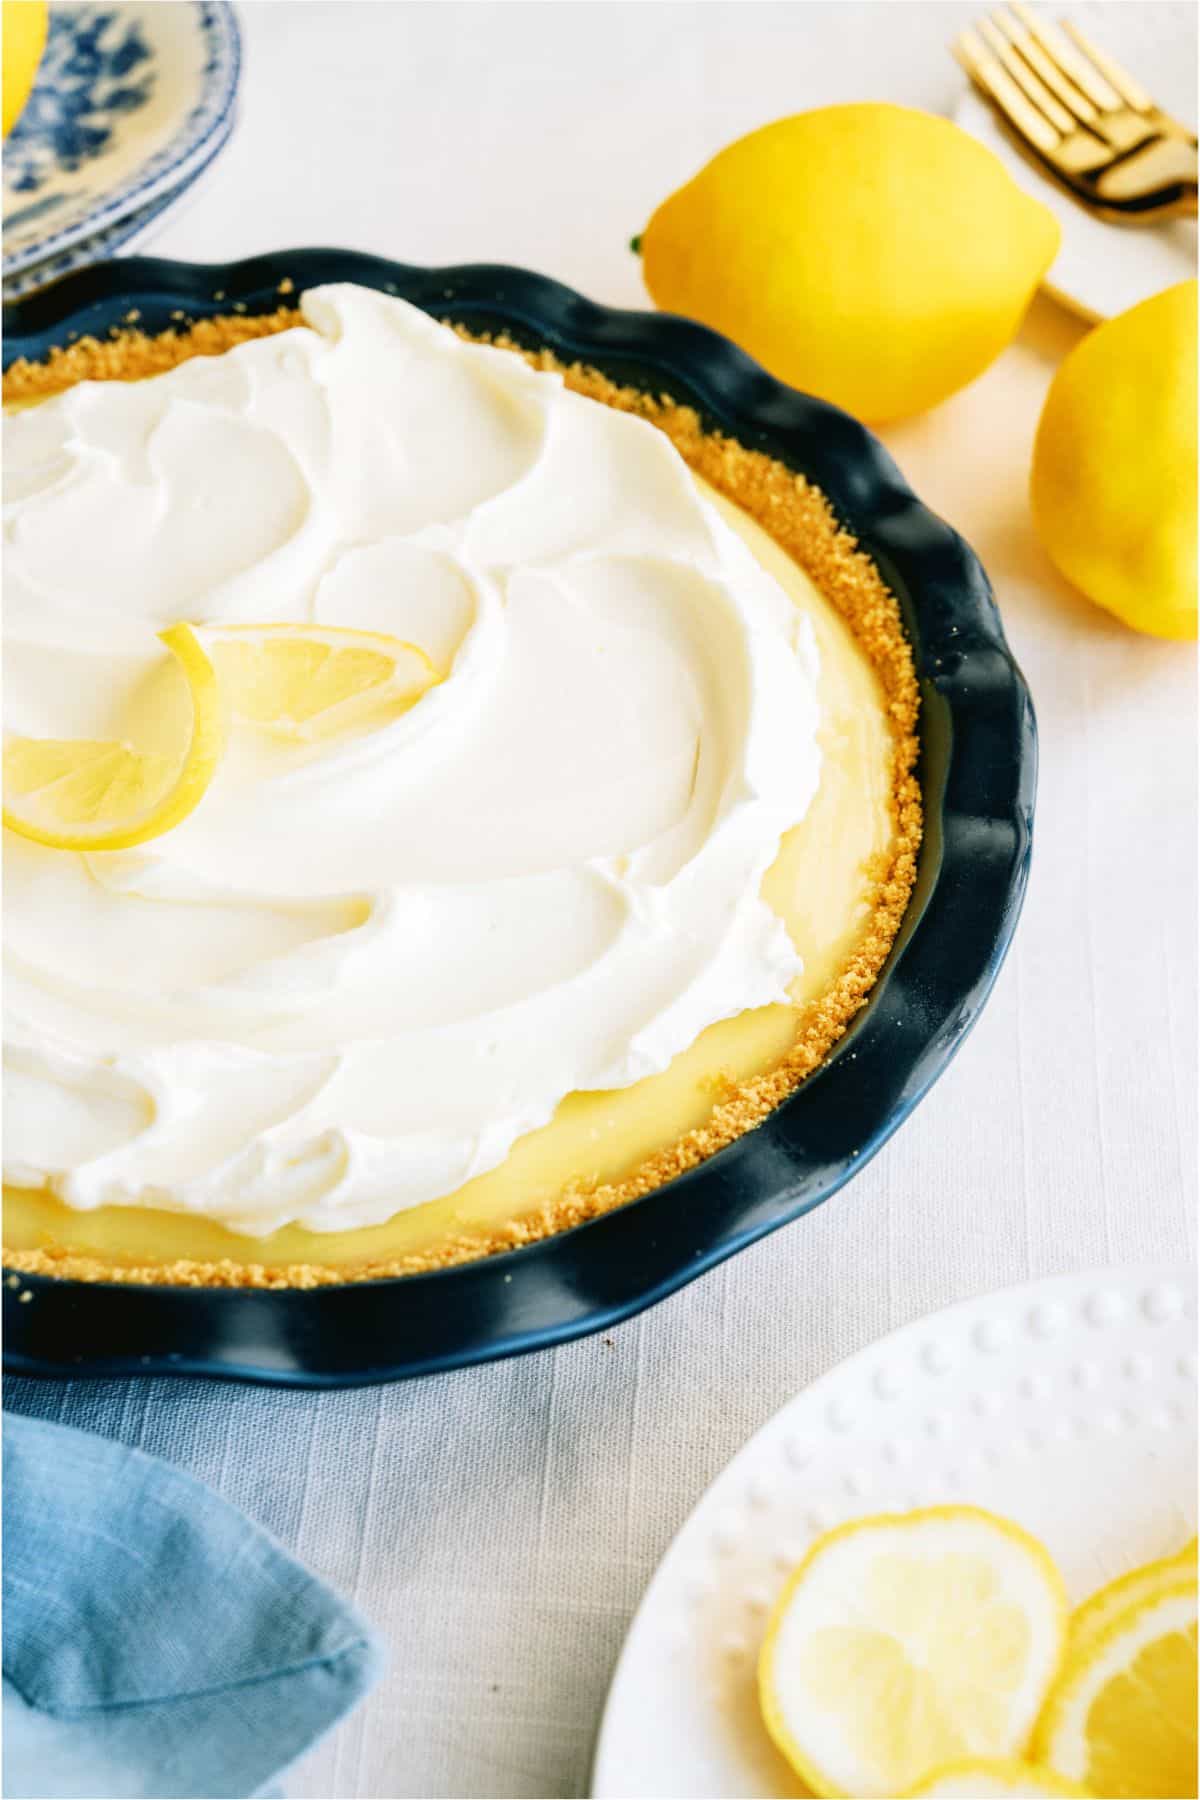 Creamy Lemon Pie in pie dish with fresh lemons on the side